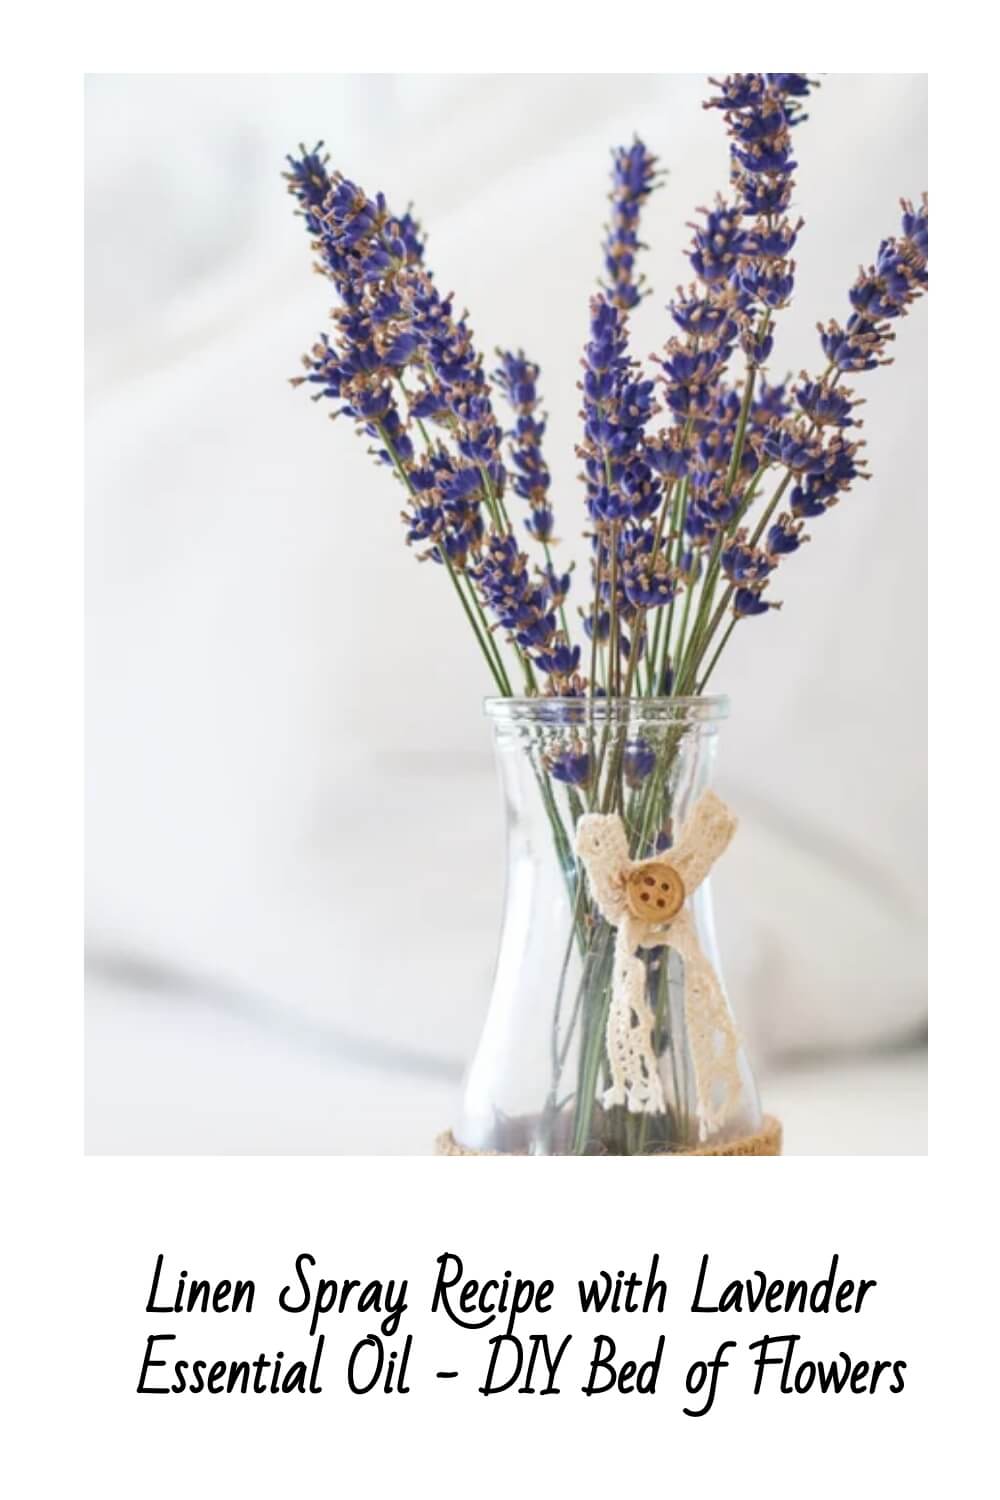 Linen Spray Recipe with Lavender Essential Oil